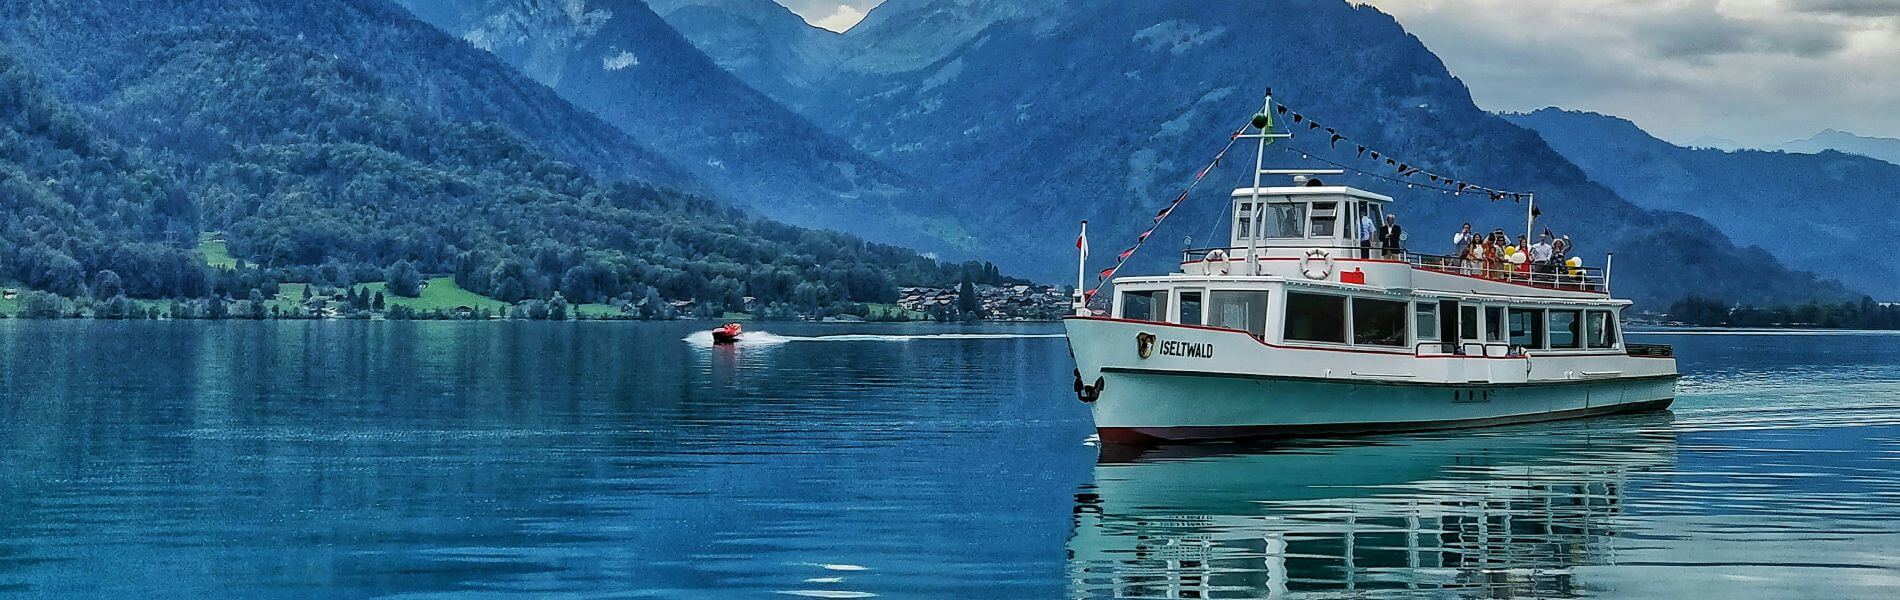 Panorama - Yacht Saphir, Lucerne